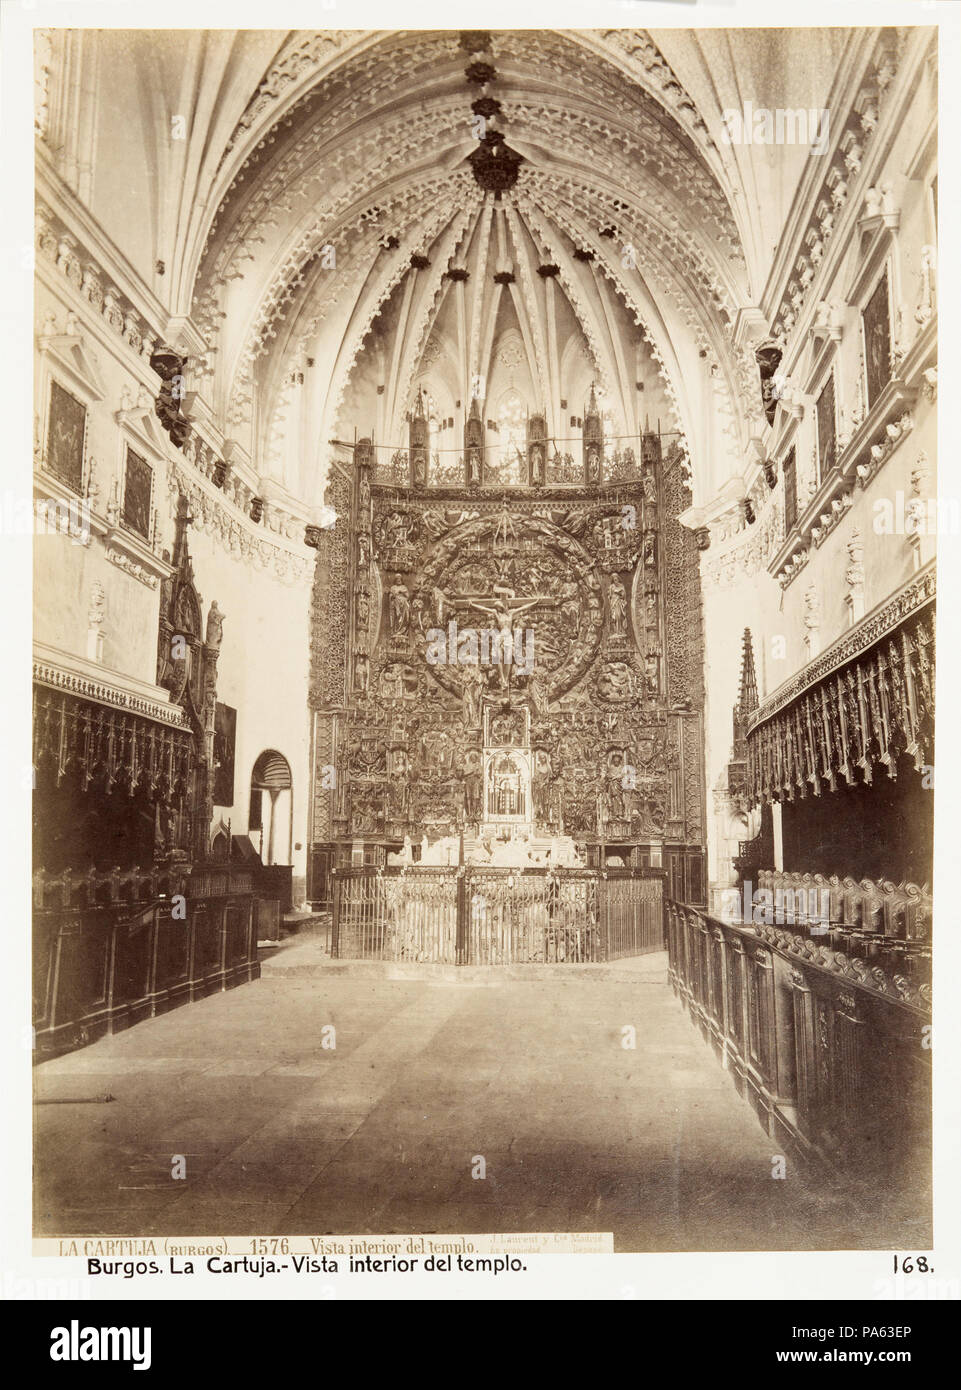 86 Fotografi av-Burgos. La Cartuja, vista Interior del Templo - Hallwylska museet - 105349 Stockfoto